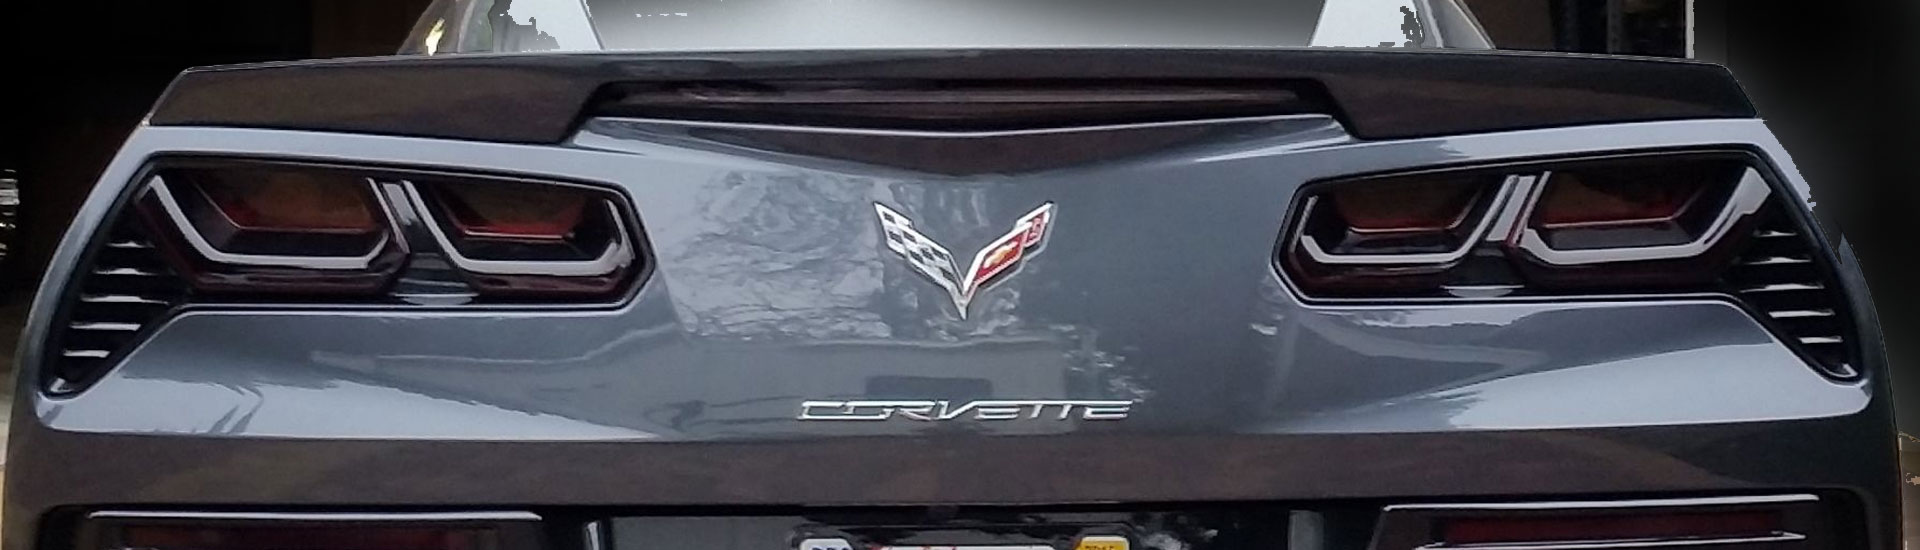 Chevrolet Corvette Tail Light Tint Covers